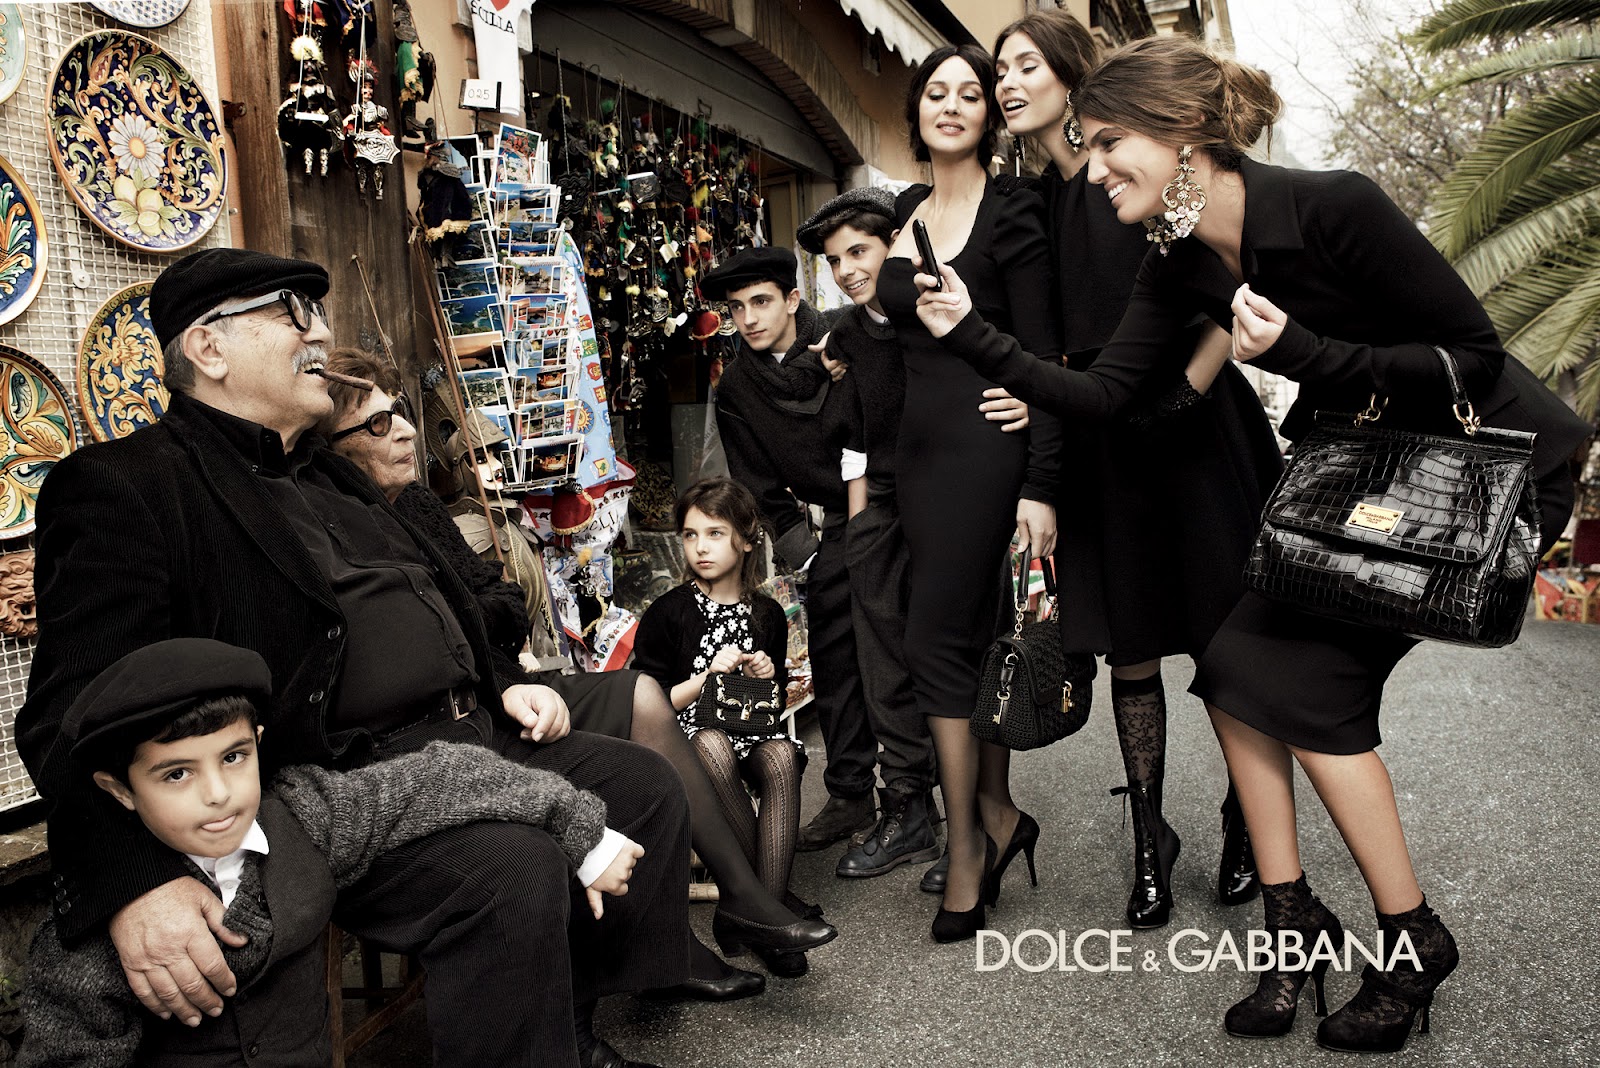 So Last-Year: Dolce & Gabbana jewellery | Last-Year Girl: So Last-Year ...